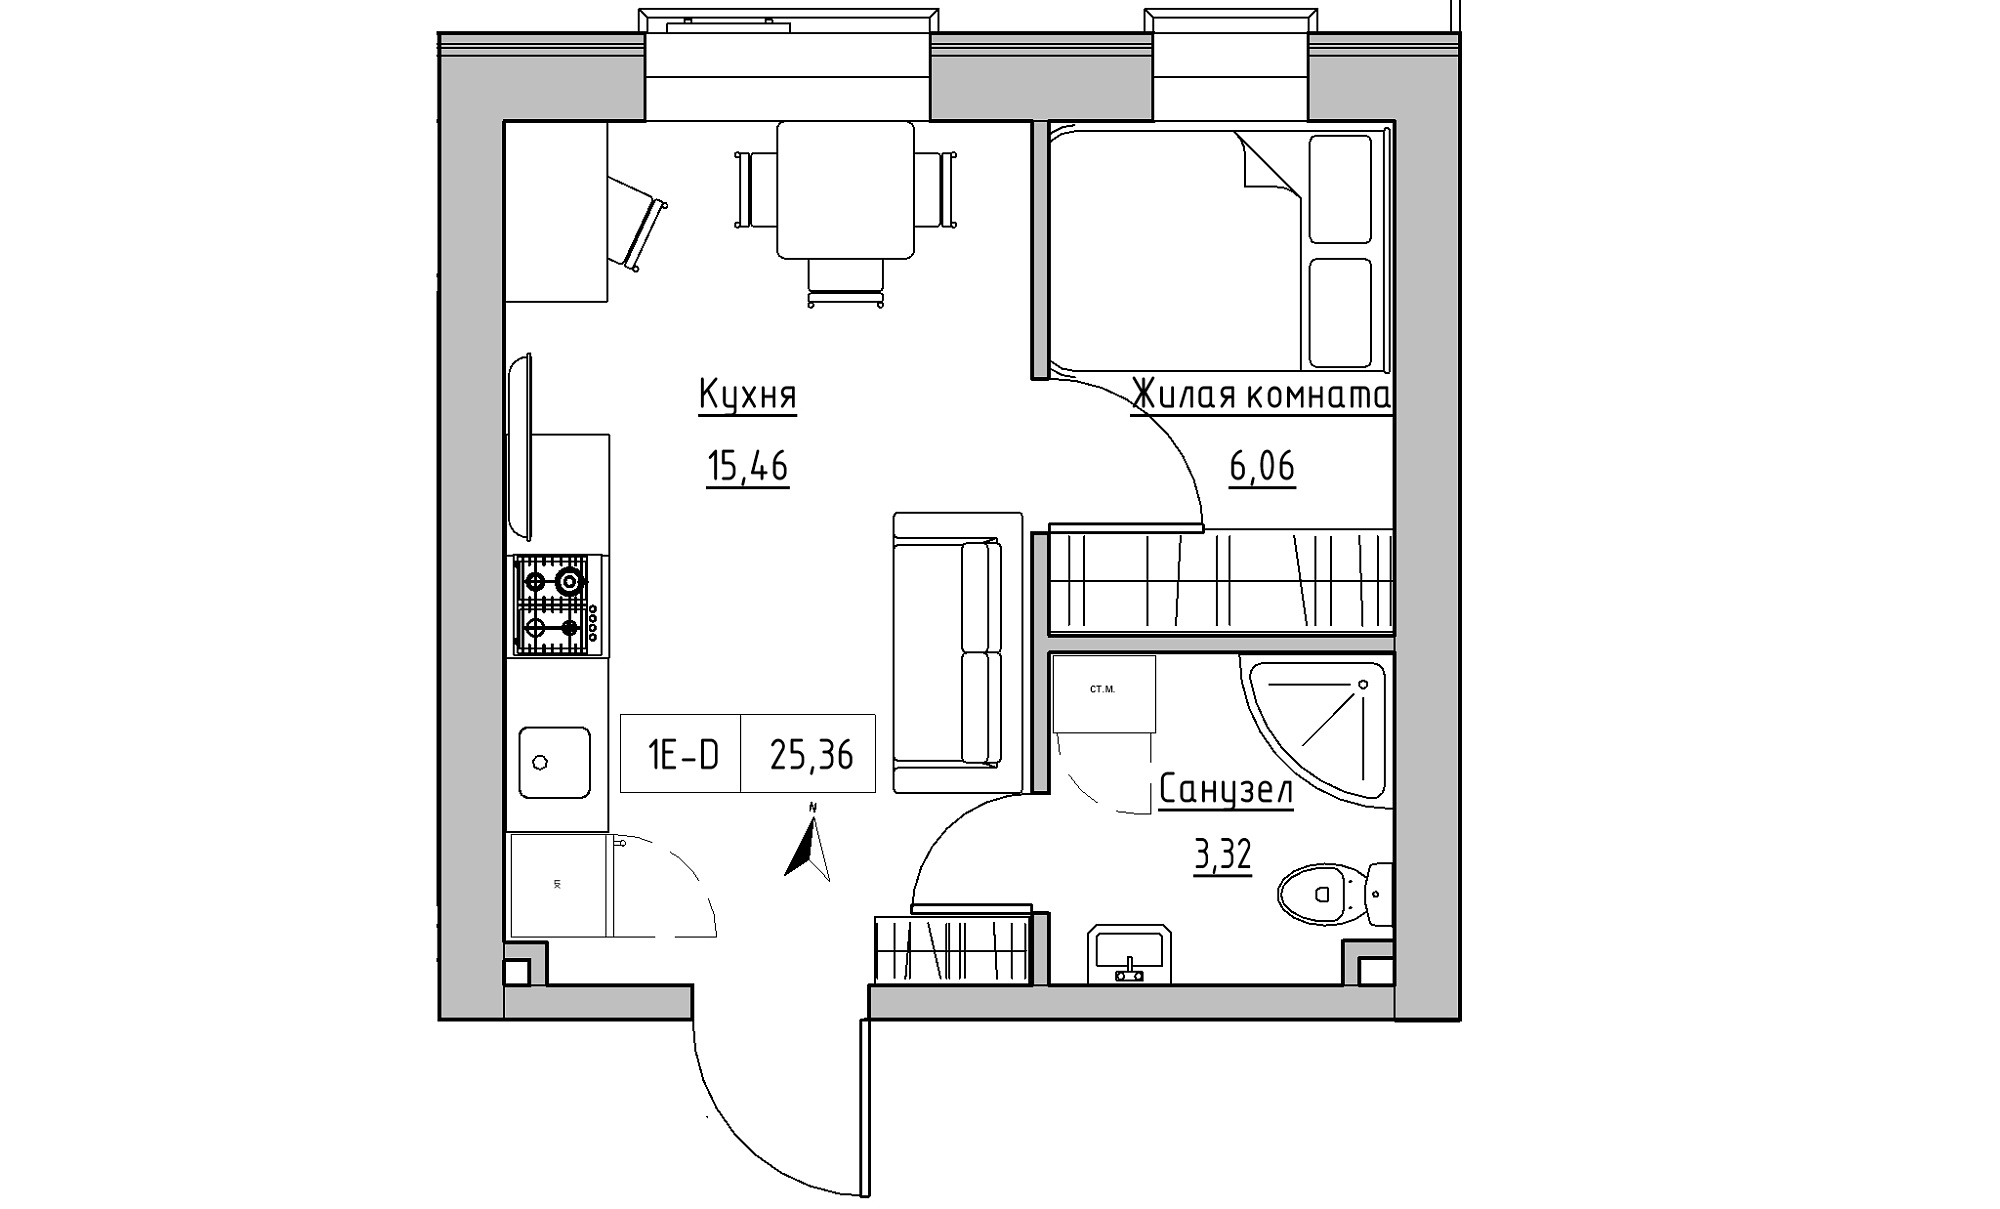 Planning 1-rm flats area 25.36m2, KS-016-04/0002.